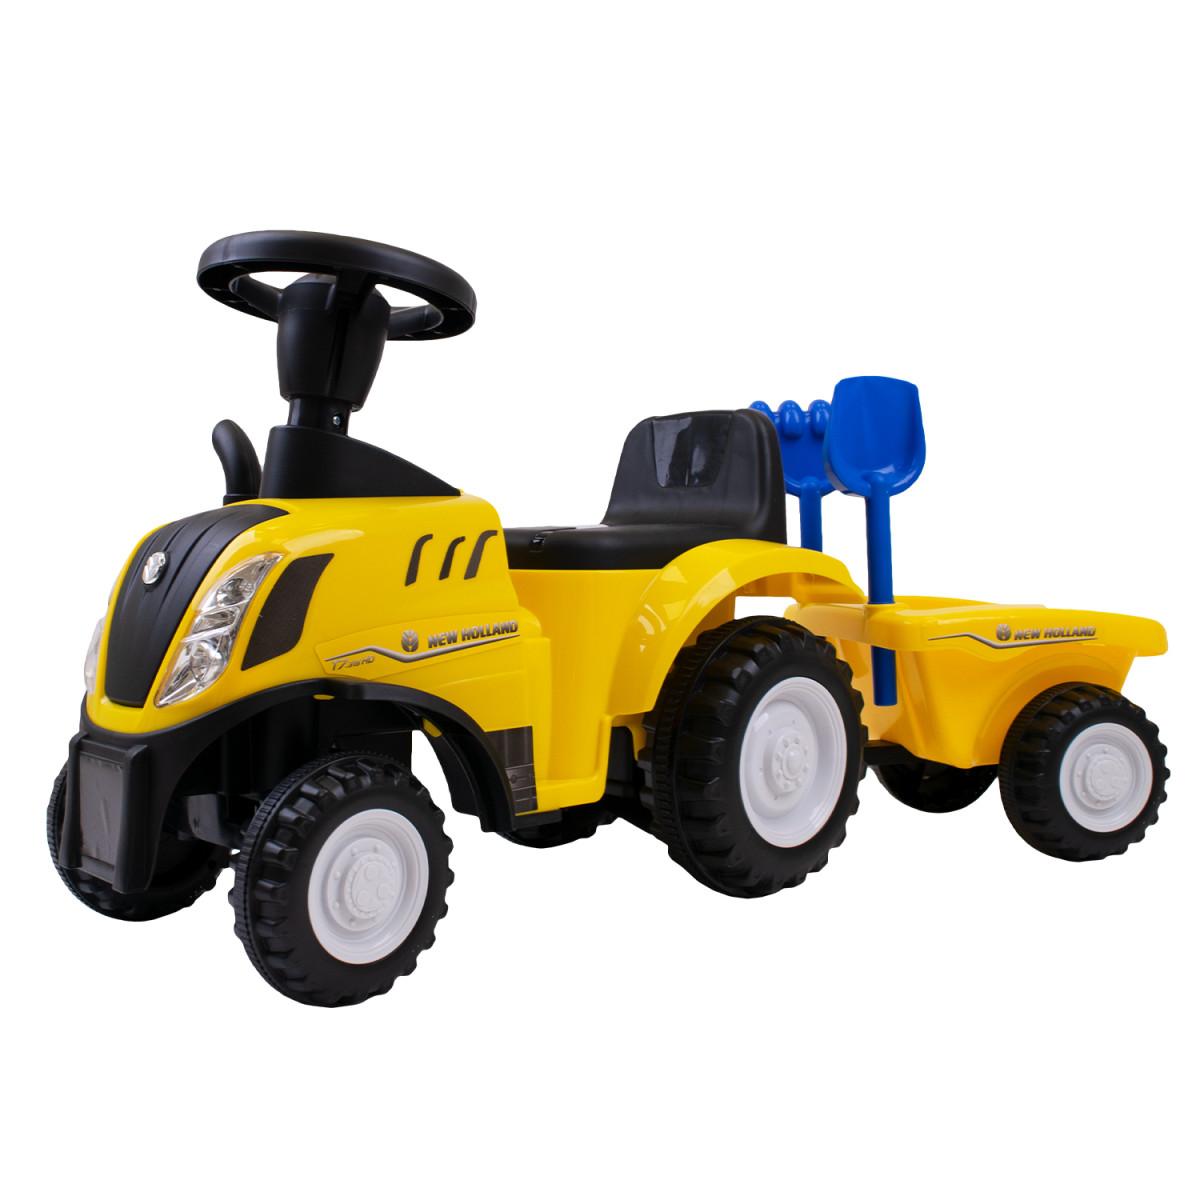 Selected image for JUNGLE Traktor guralica za decu 658T žuta